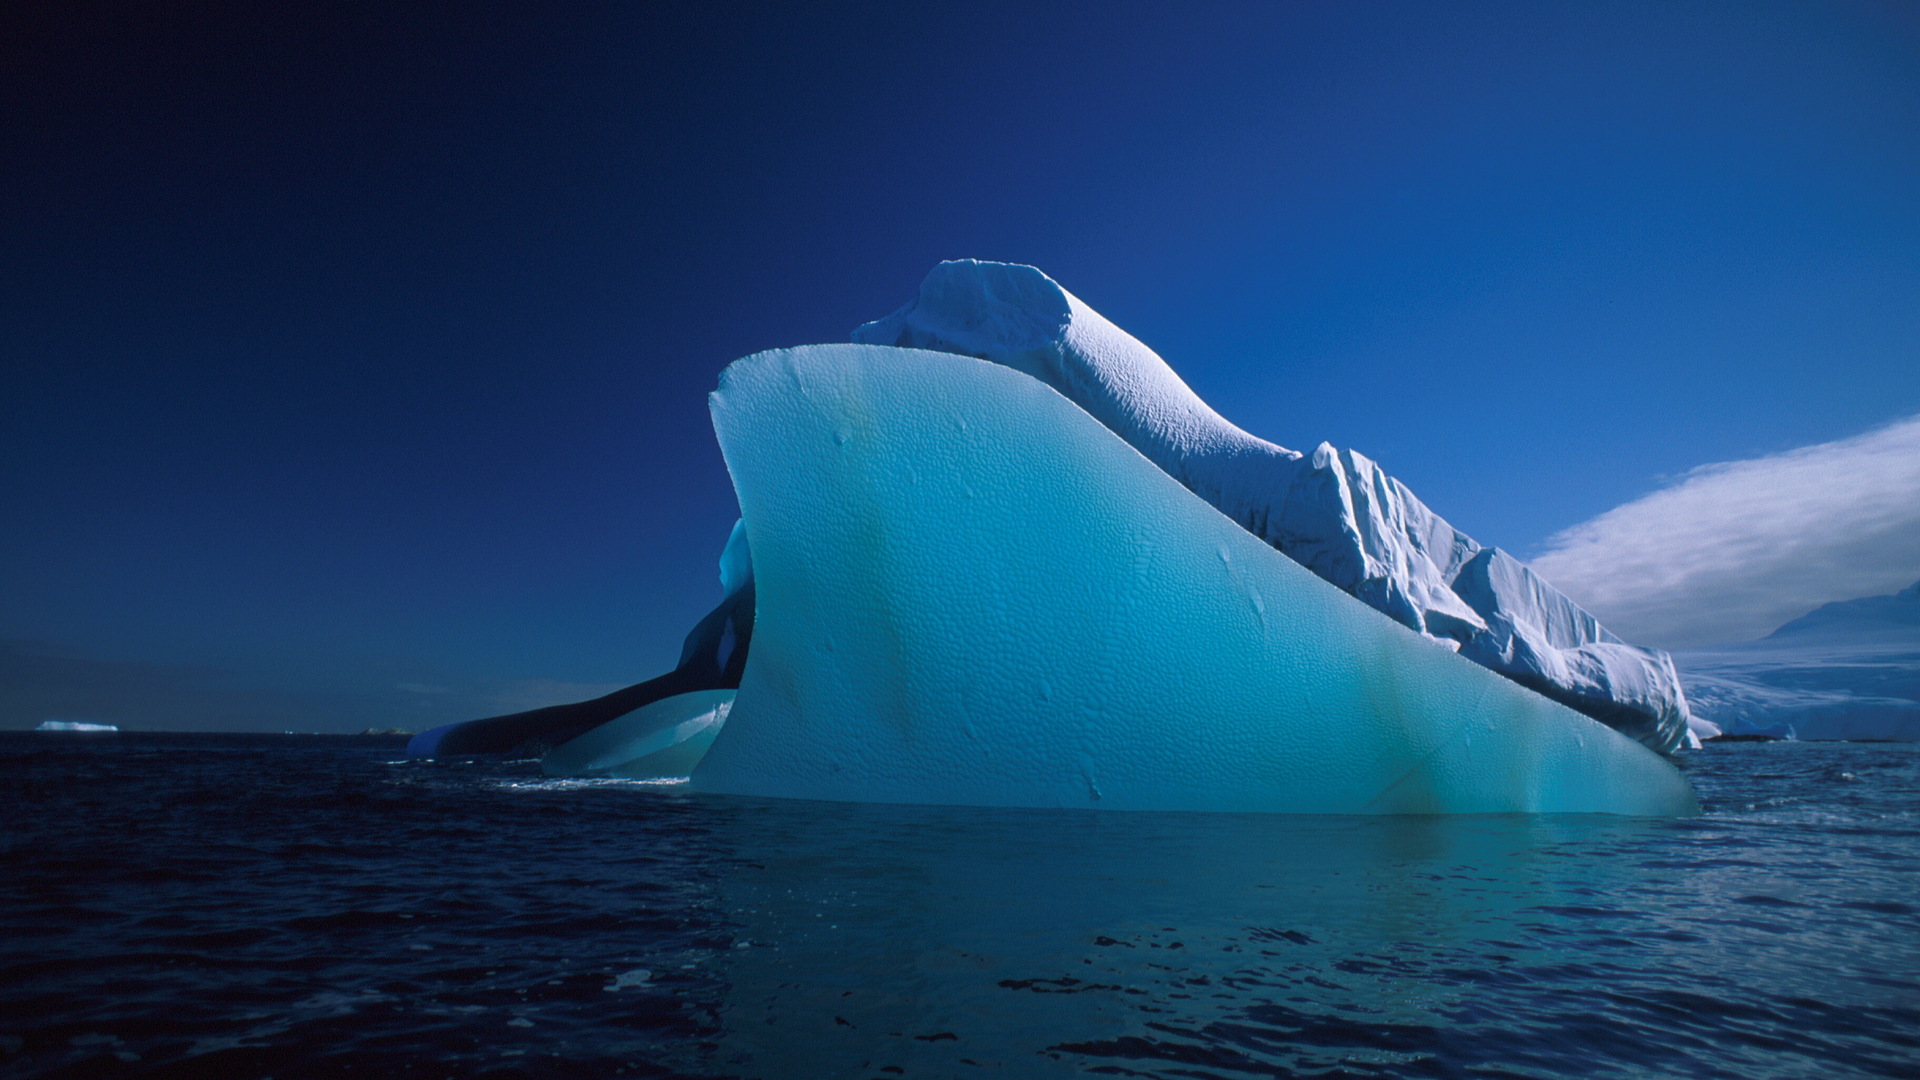 iceberg wallpaper hd,iceberg,ghiaccio,oceano,oceano artico,ghiacciaio